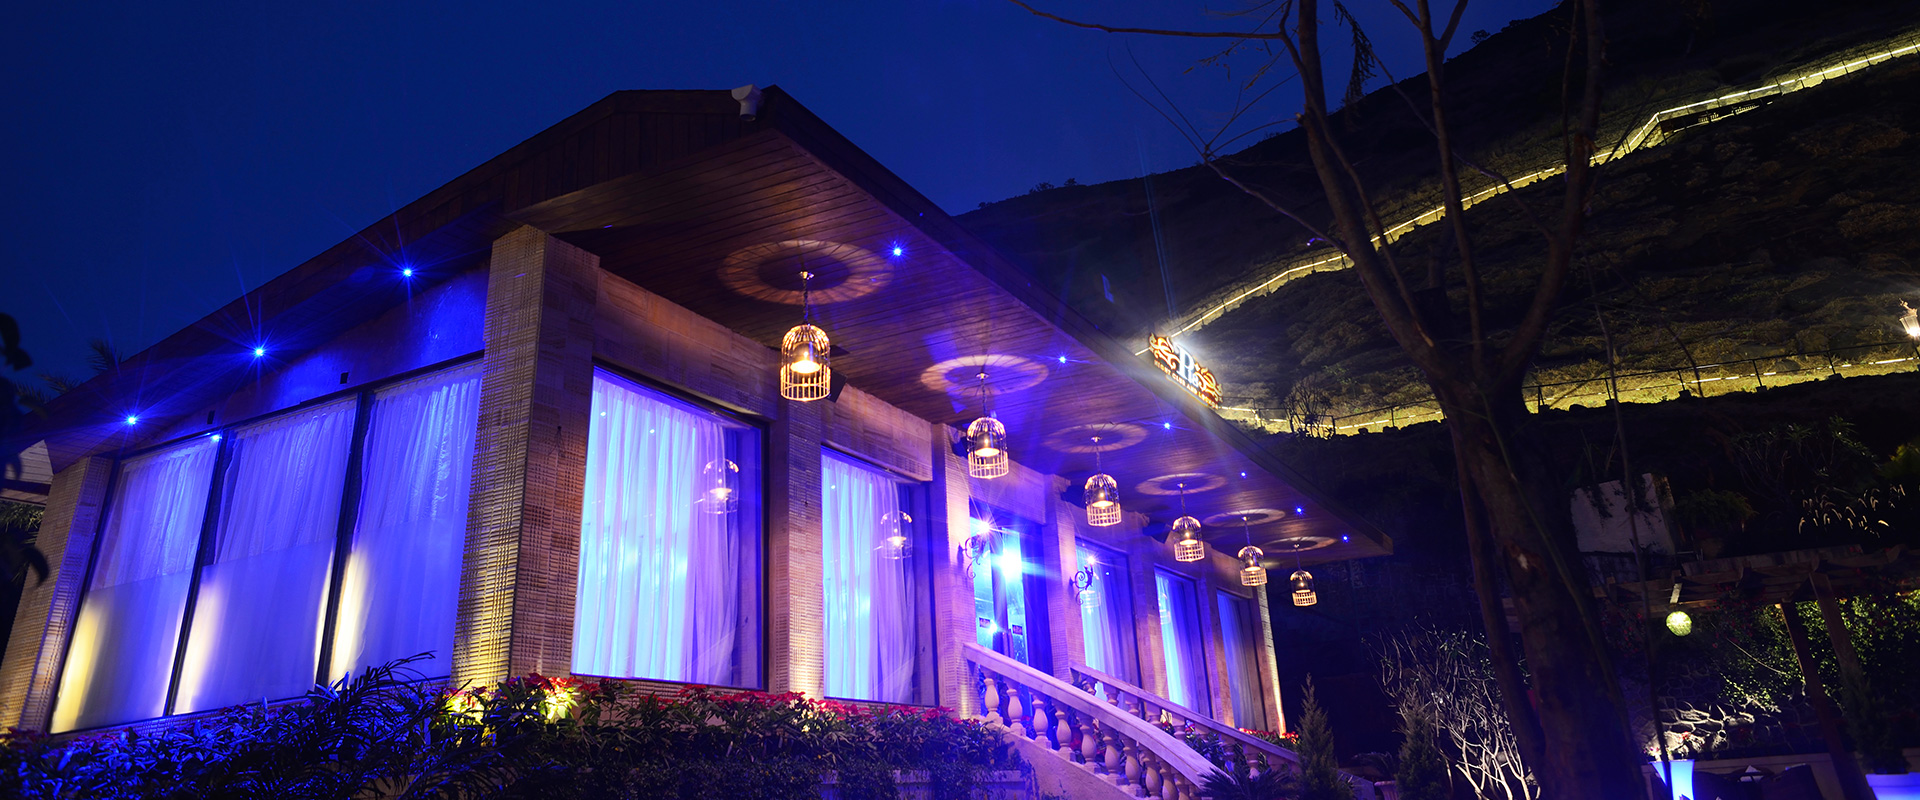 P 18 night club & lounge at della resorts